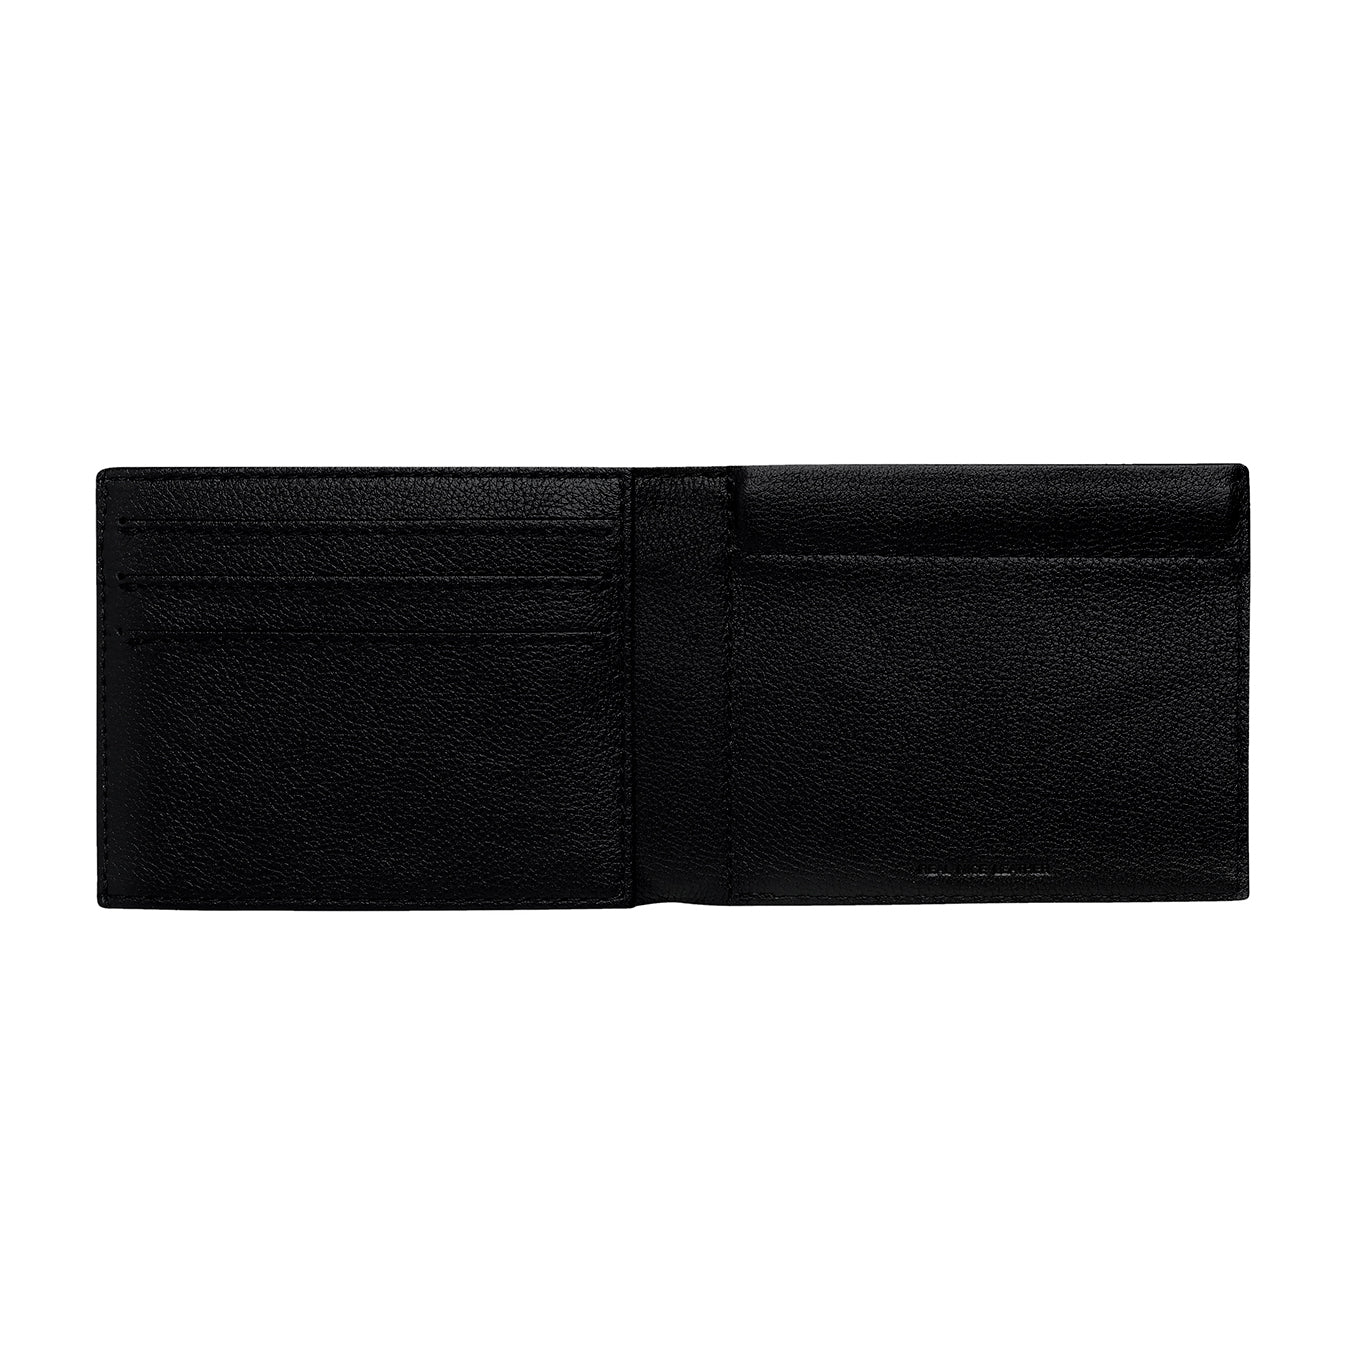 Noah leather wallet black